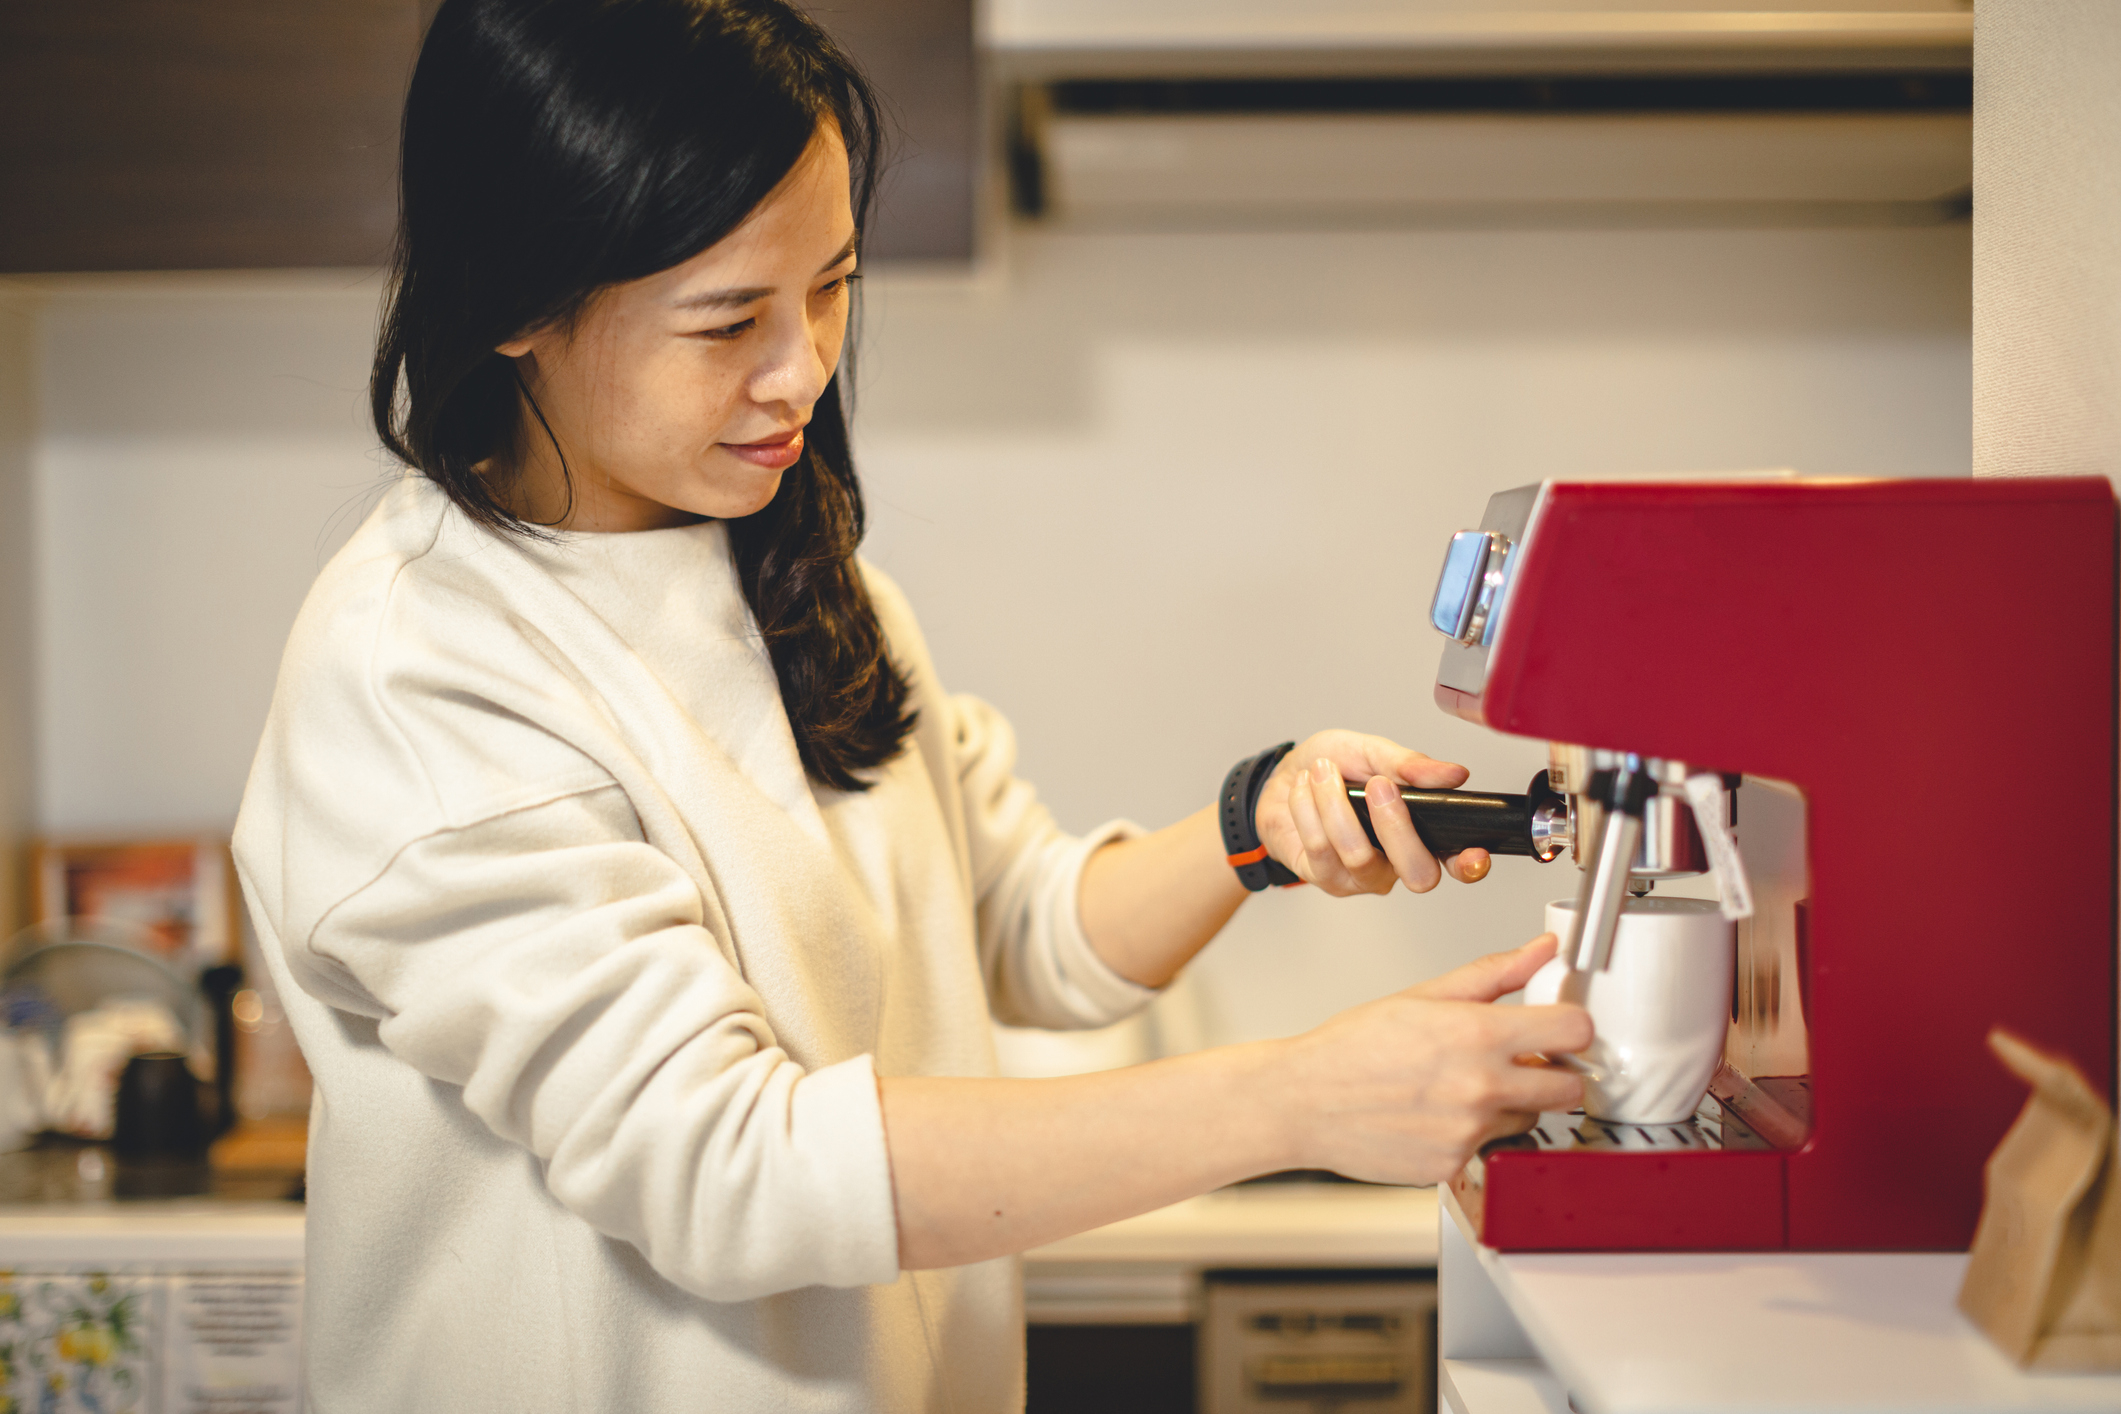 a woman making an espresso